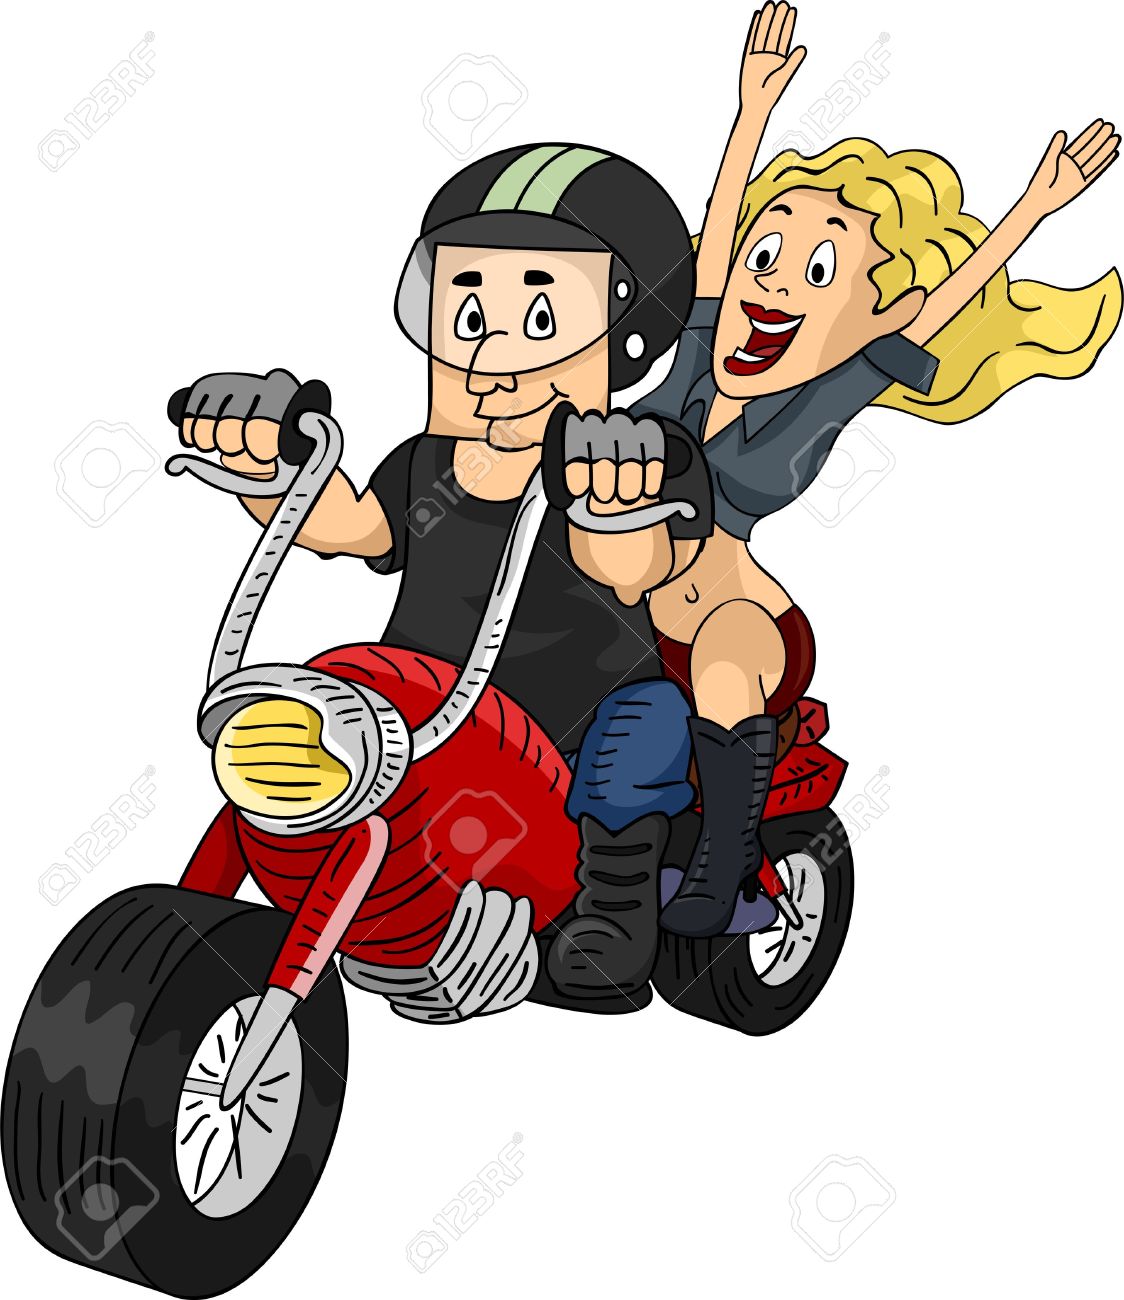 free cartoon motorcycle clipart - photo #40